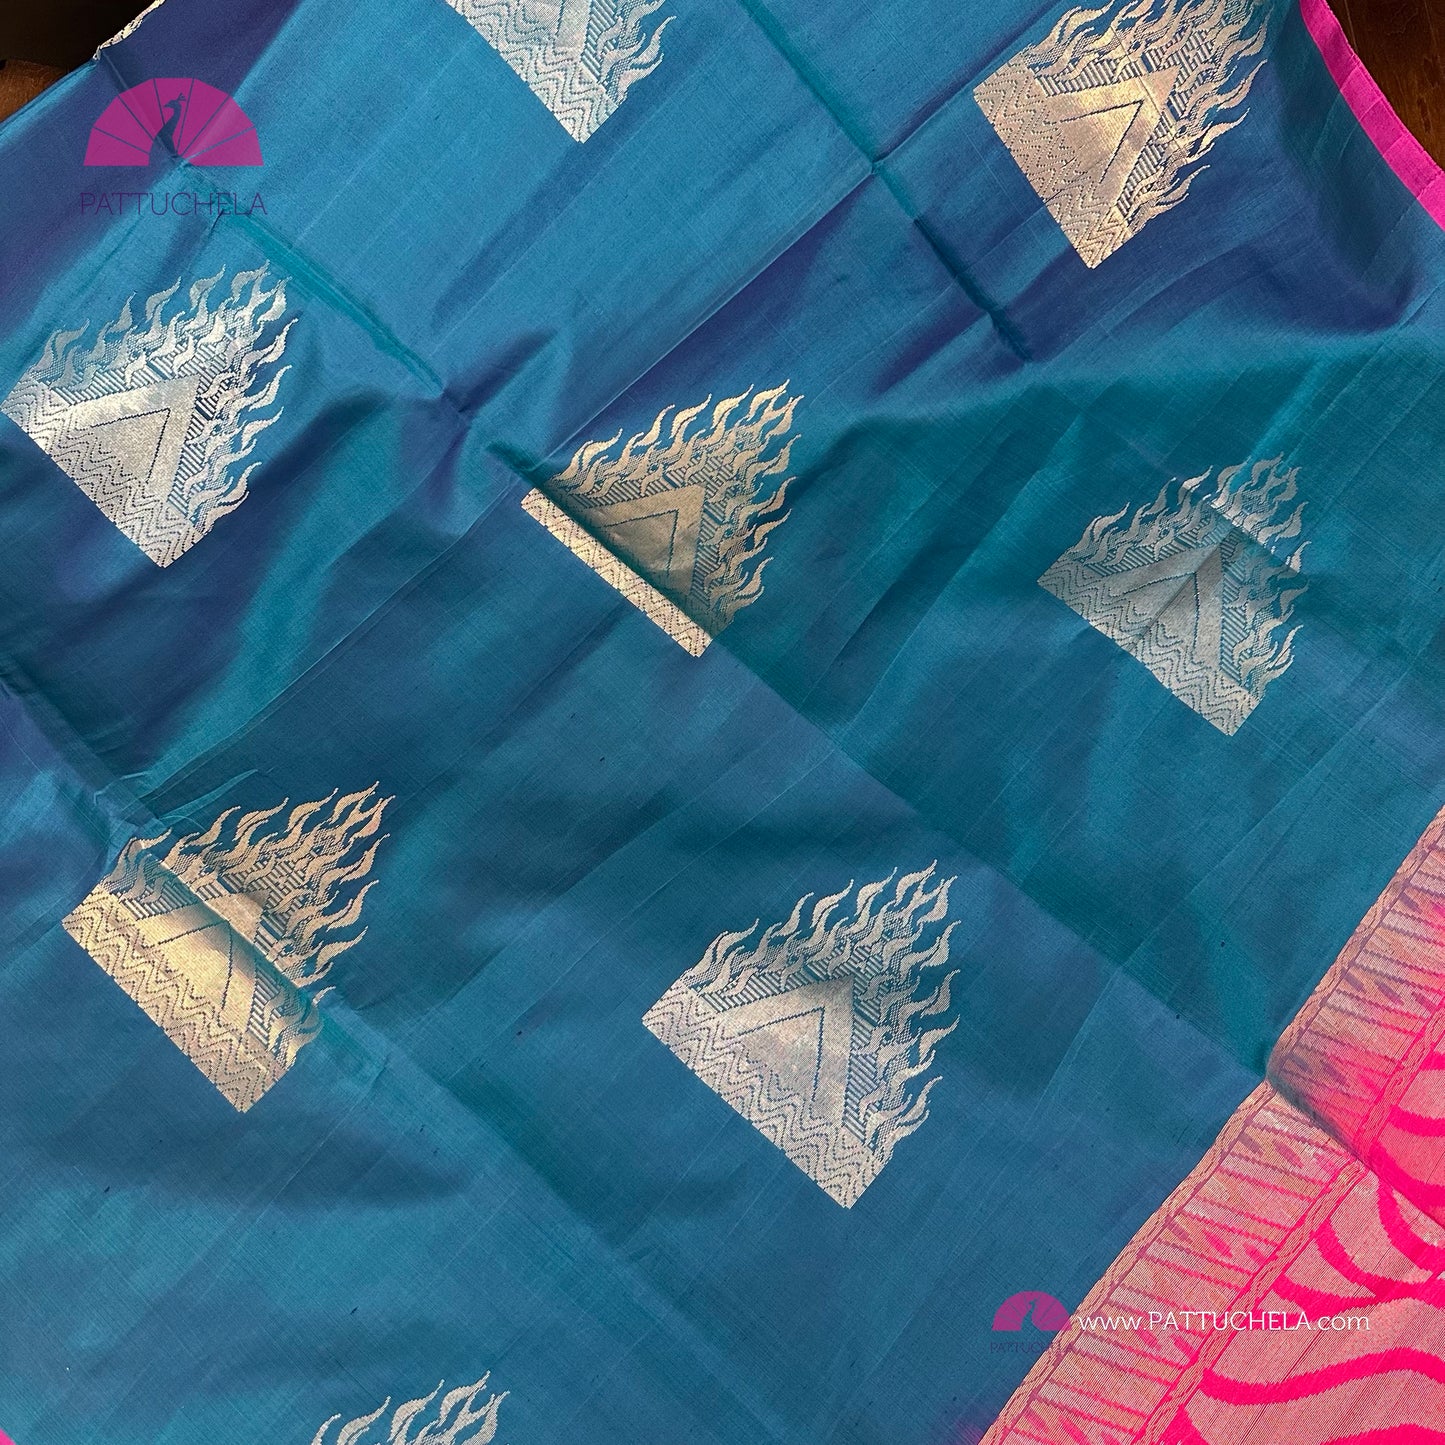 Blue Kanchipuram Borderless Soft Silk Saree with Gold and Silver Zari Motifs | Party Wear | SILK MARK CERTIFIED | Kanjivaram Silks